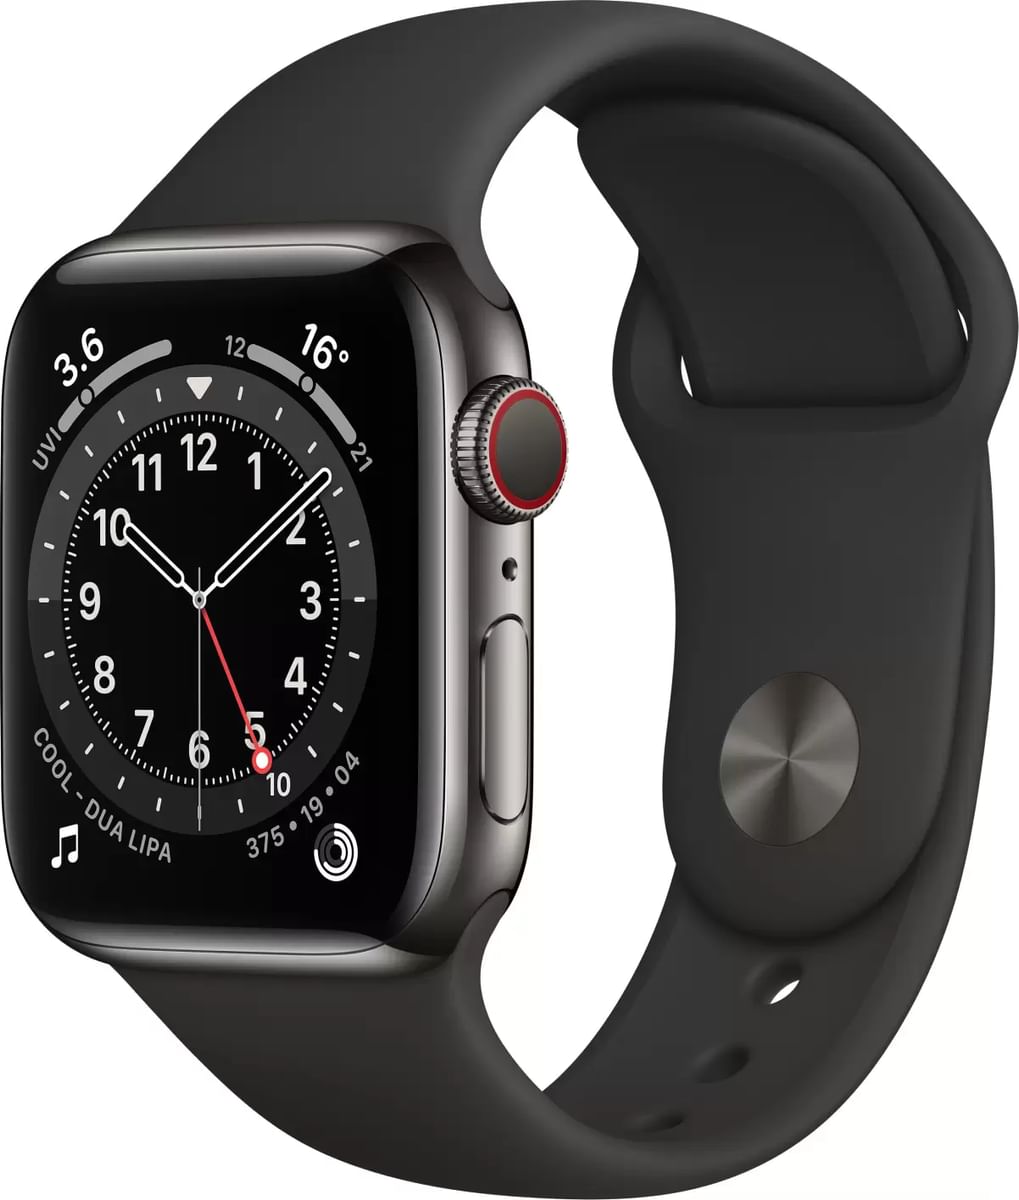 Apple Watch Series 6 Stainless Steel 40 mm (GPS + Cellular) Best Price Apple Watch Stainless Steel Review